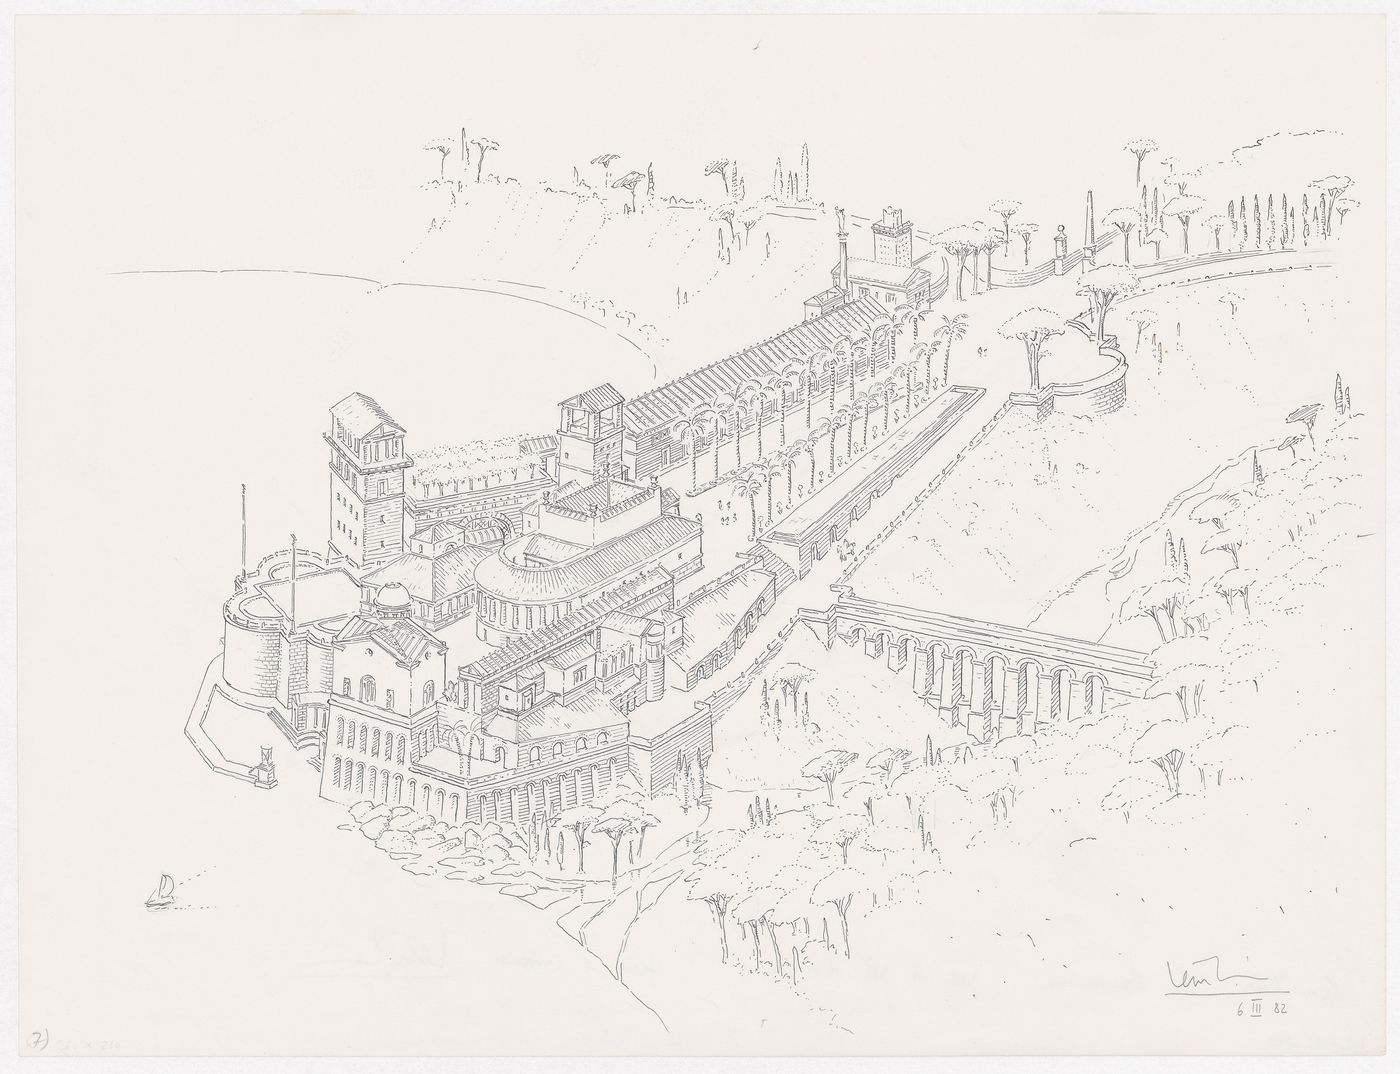 Imaginary reconstruction perspective of Pliny's Laurentine Villa